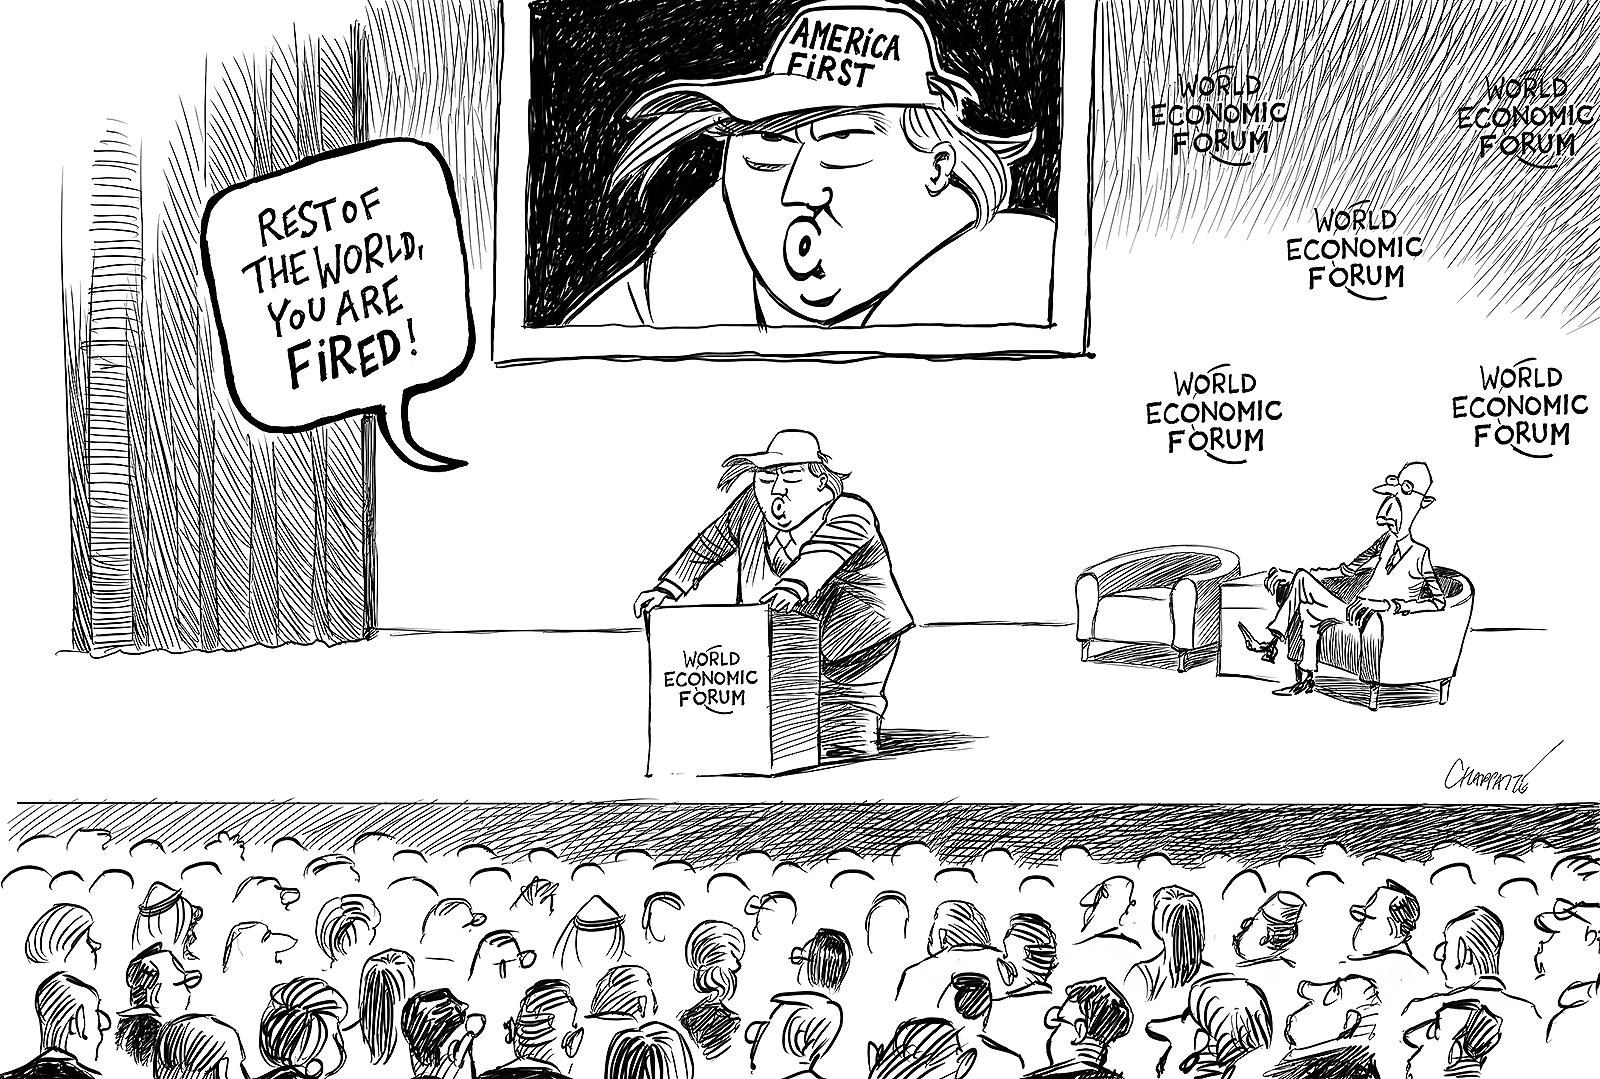 Trump at the World Economic Forum